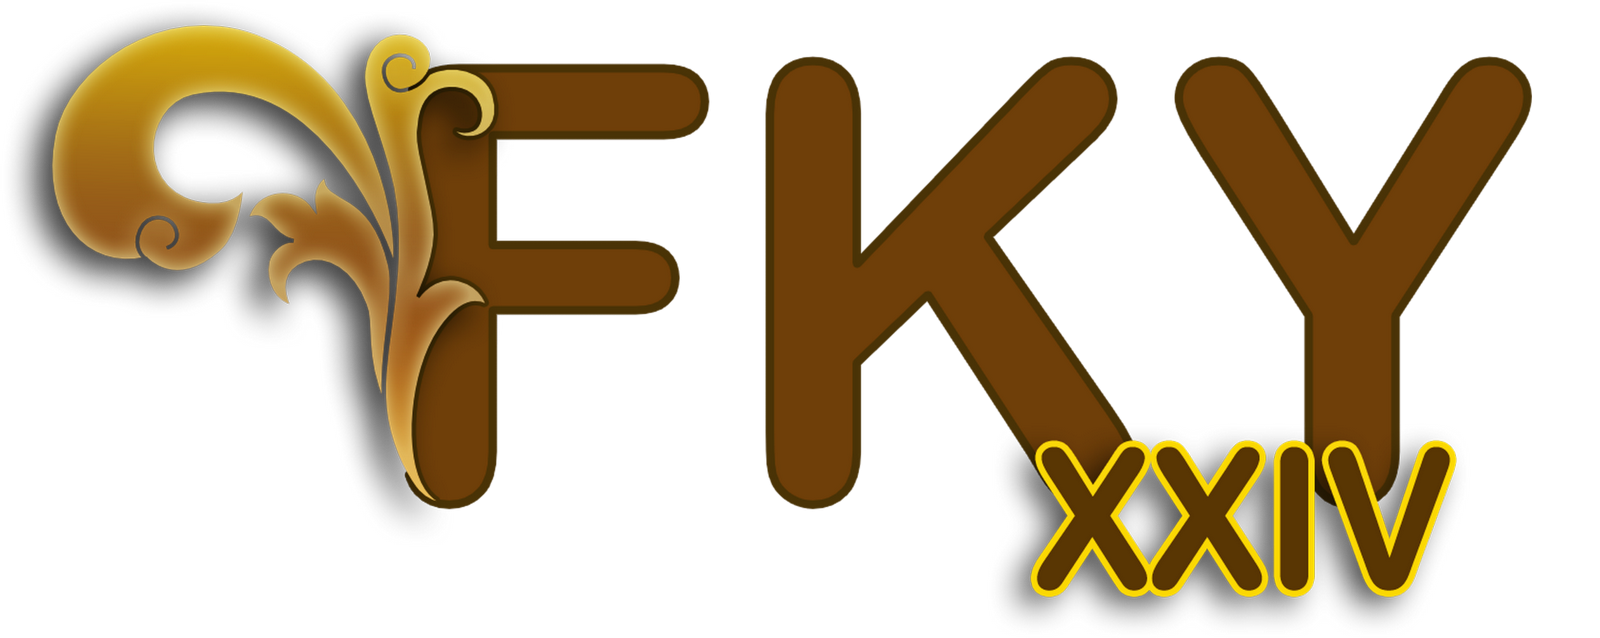 FKY XXIV